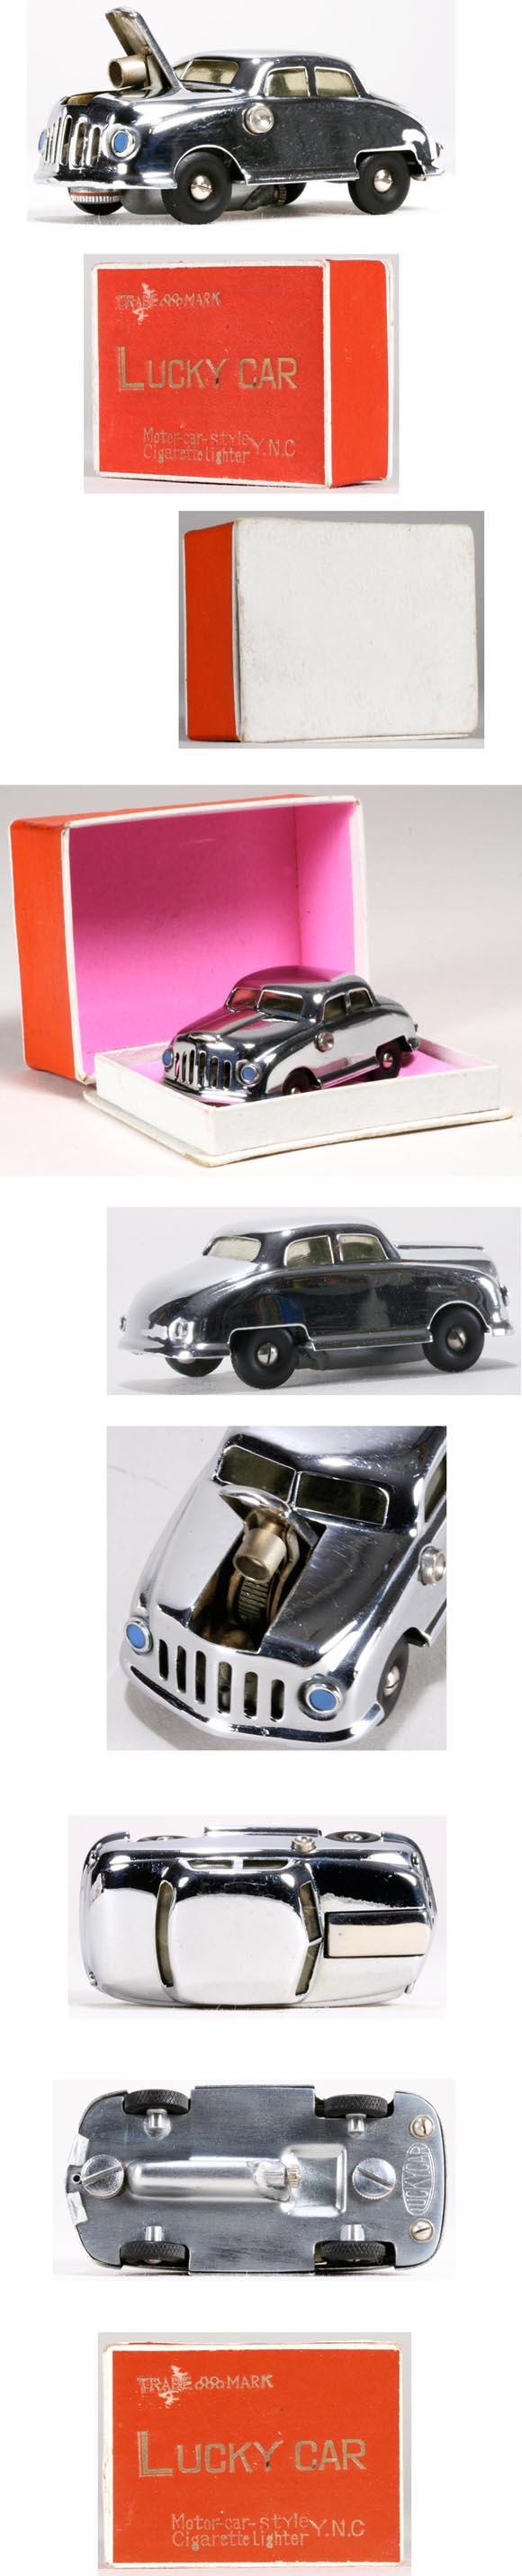 c.1946 Buick Lucky Car, Motor-Car Cigarette Lighter in Original Box